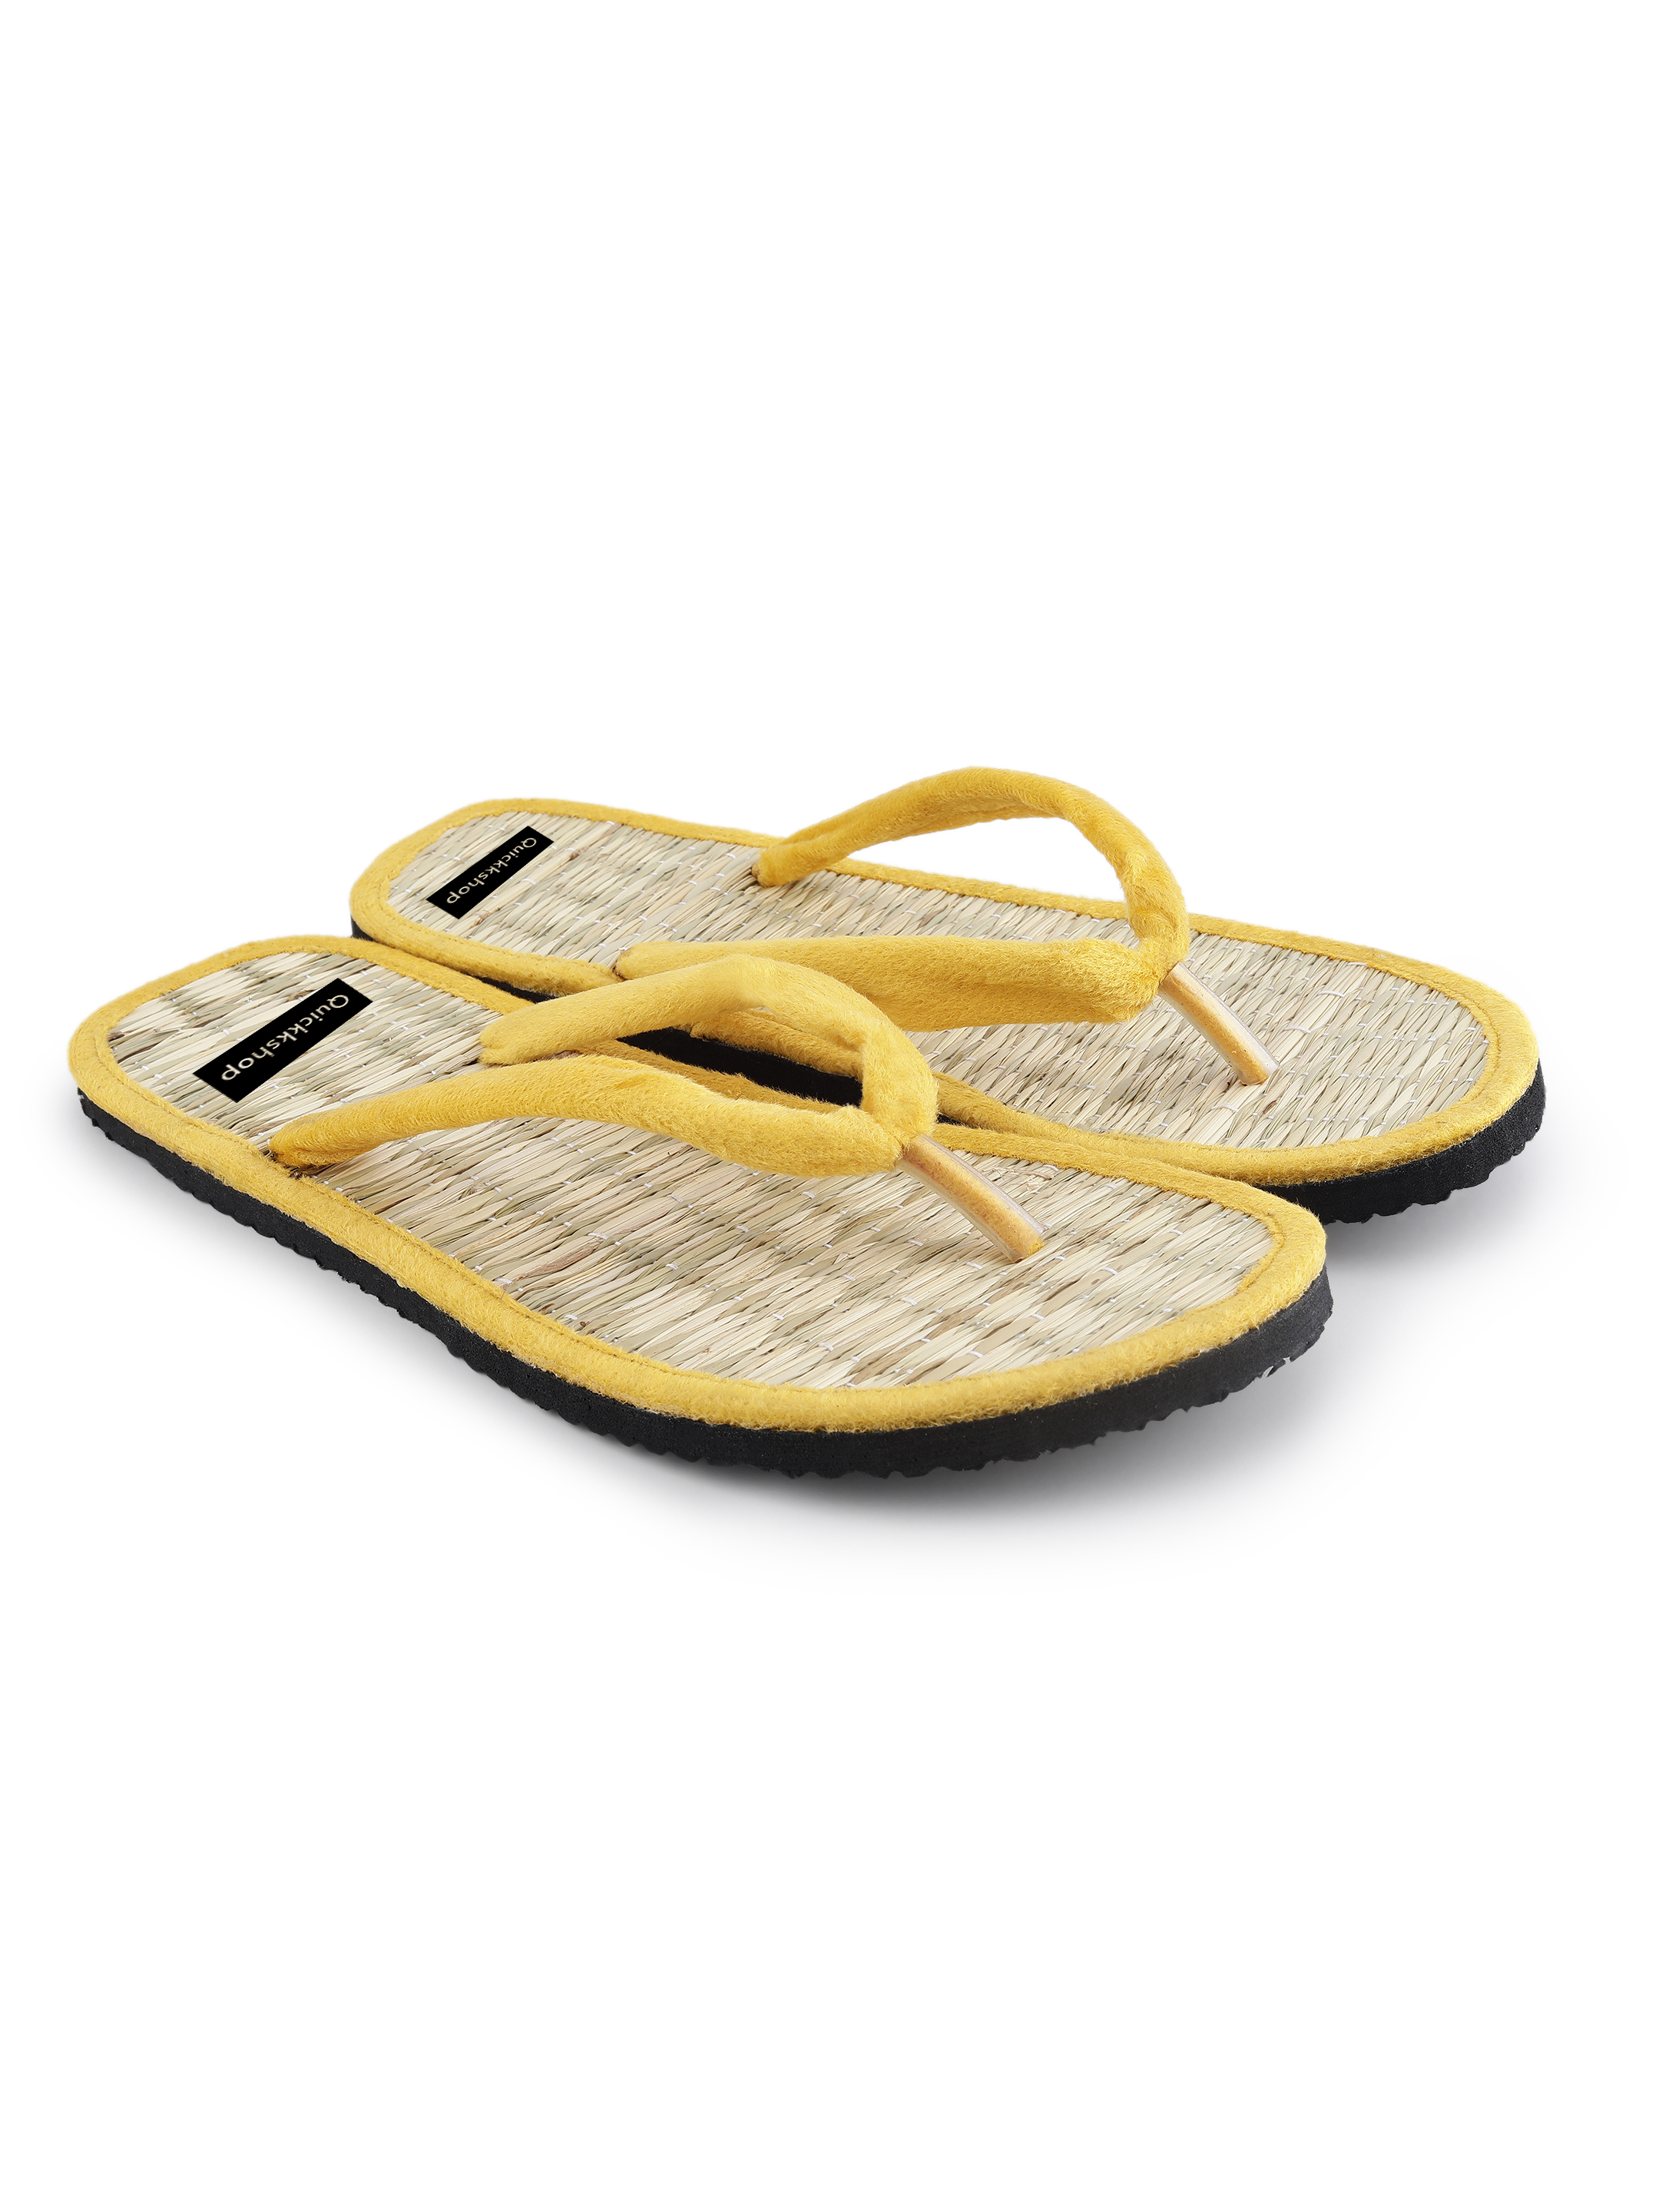 Quickkshop Natural Korai Grass Mat Eco-friendly Slippers For Women & Girl | Osho Slippers Stylish Comfortable Lightweight